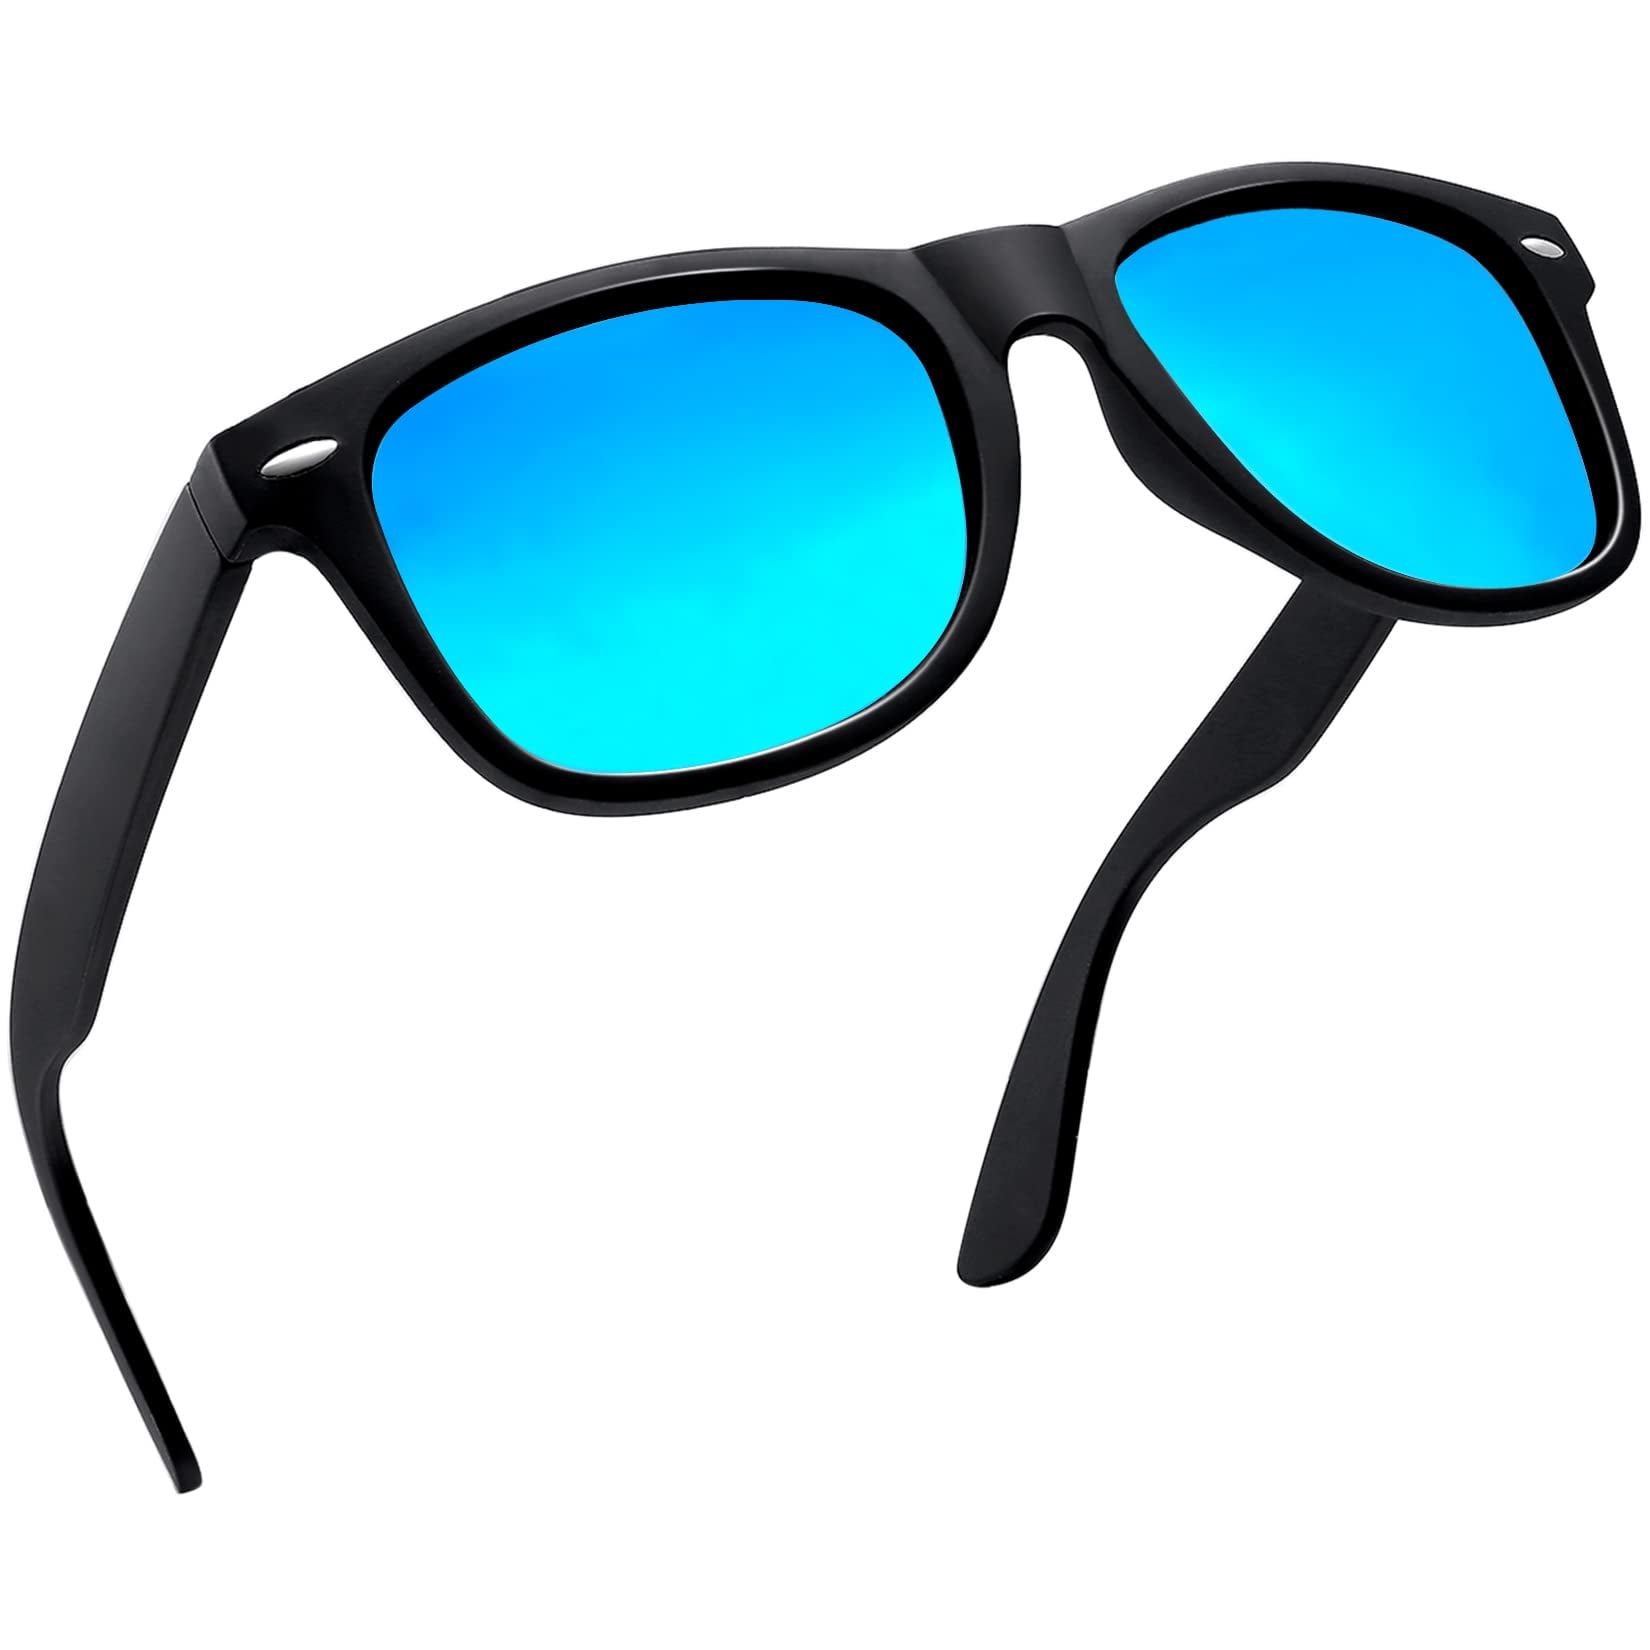 Joopin Mens Sunglasses - Sunglasses for Men, Polarized Sunglasses